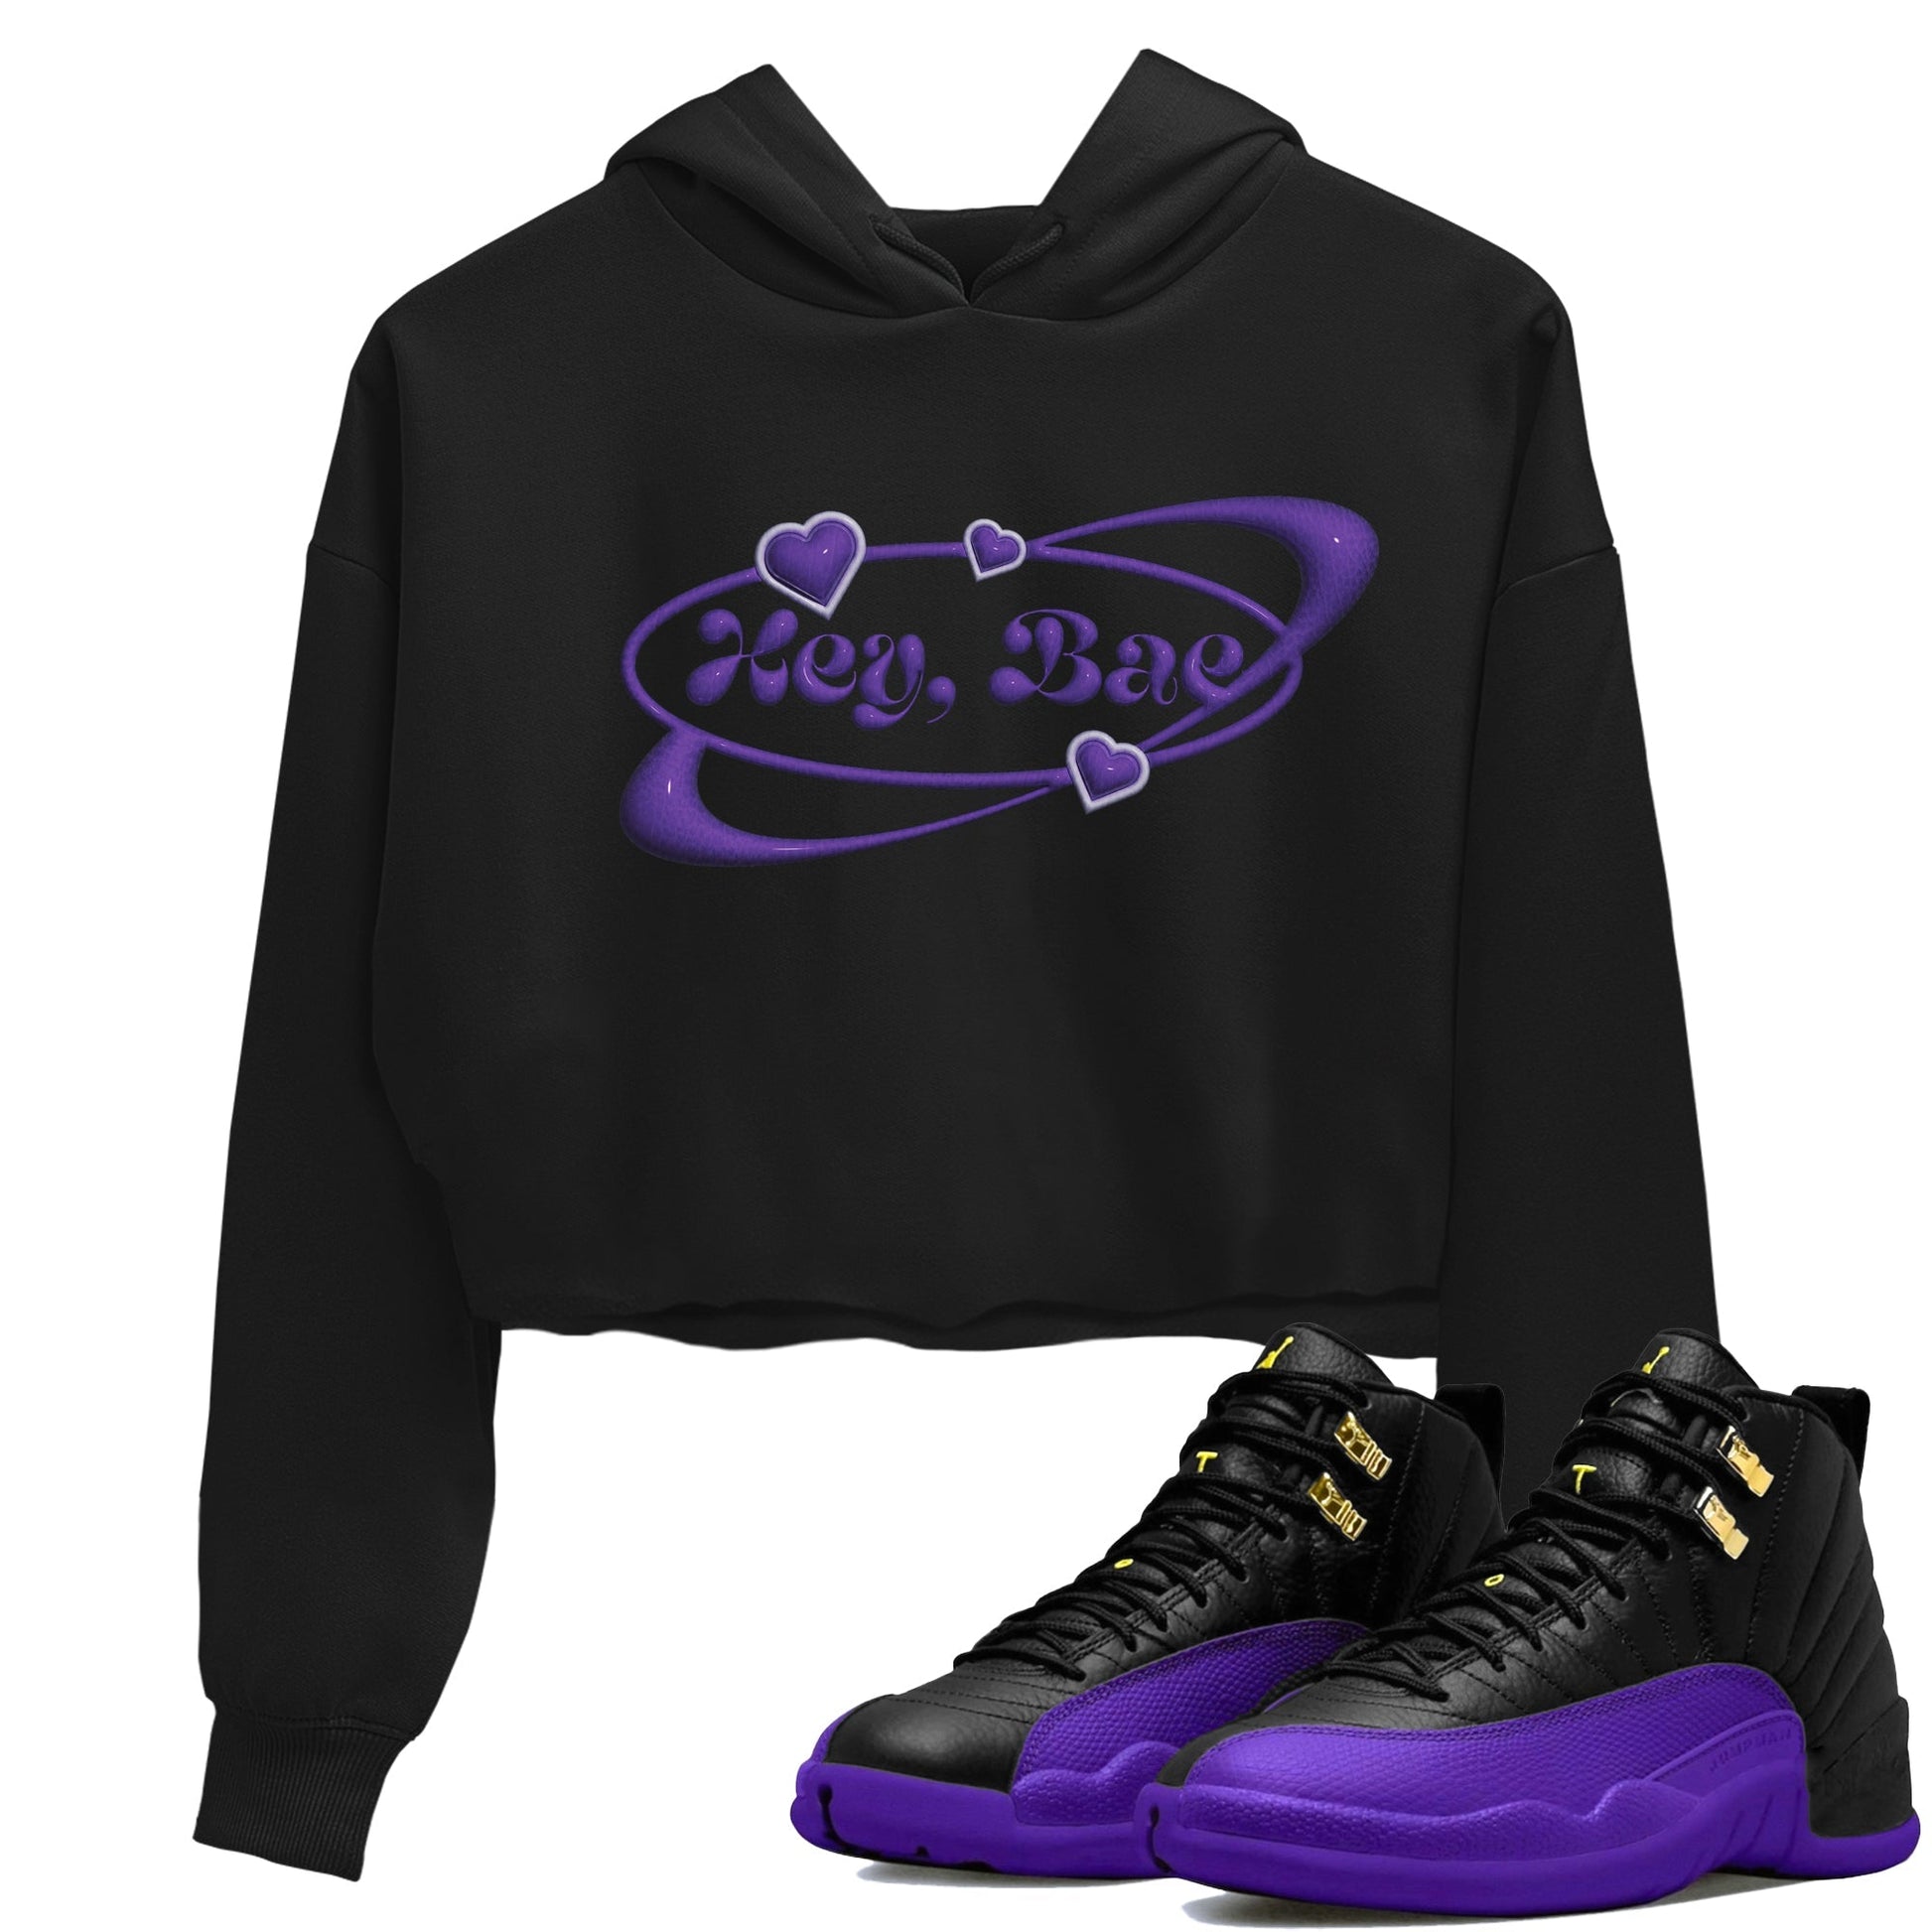 Air Jordan 12 Field Purple Sneaker Match Tees Hey Bae Sneaker Tees AJ12 Field Purple Sneaker Release Tees Women's Shirts Black 1